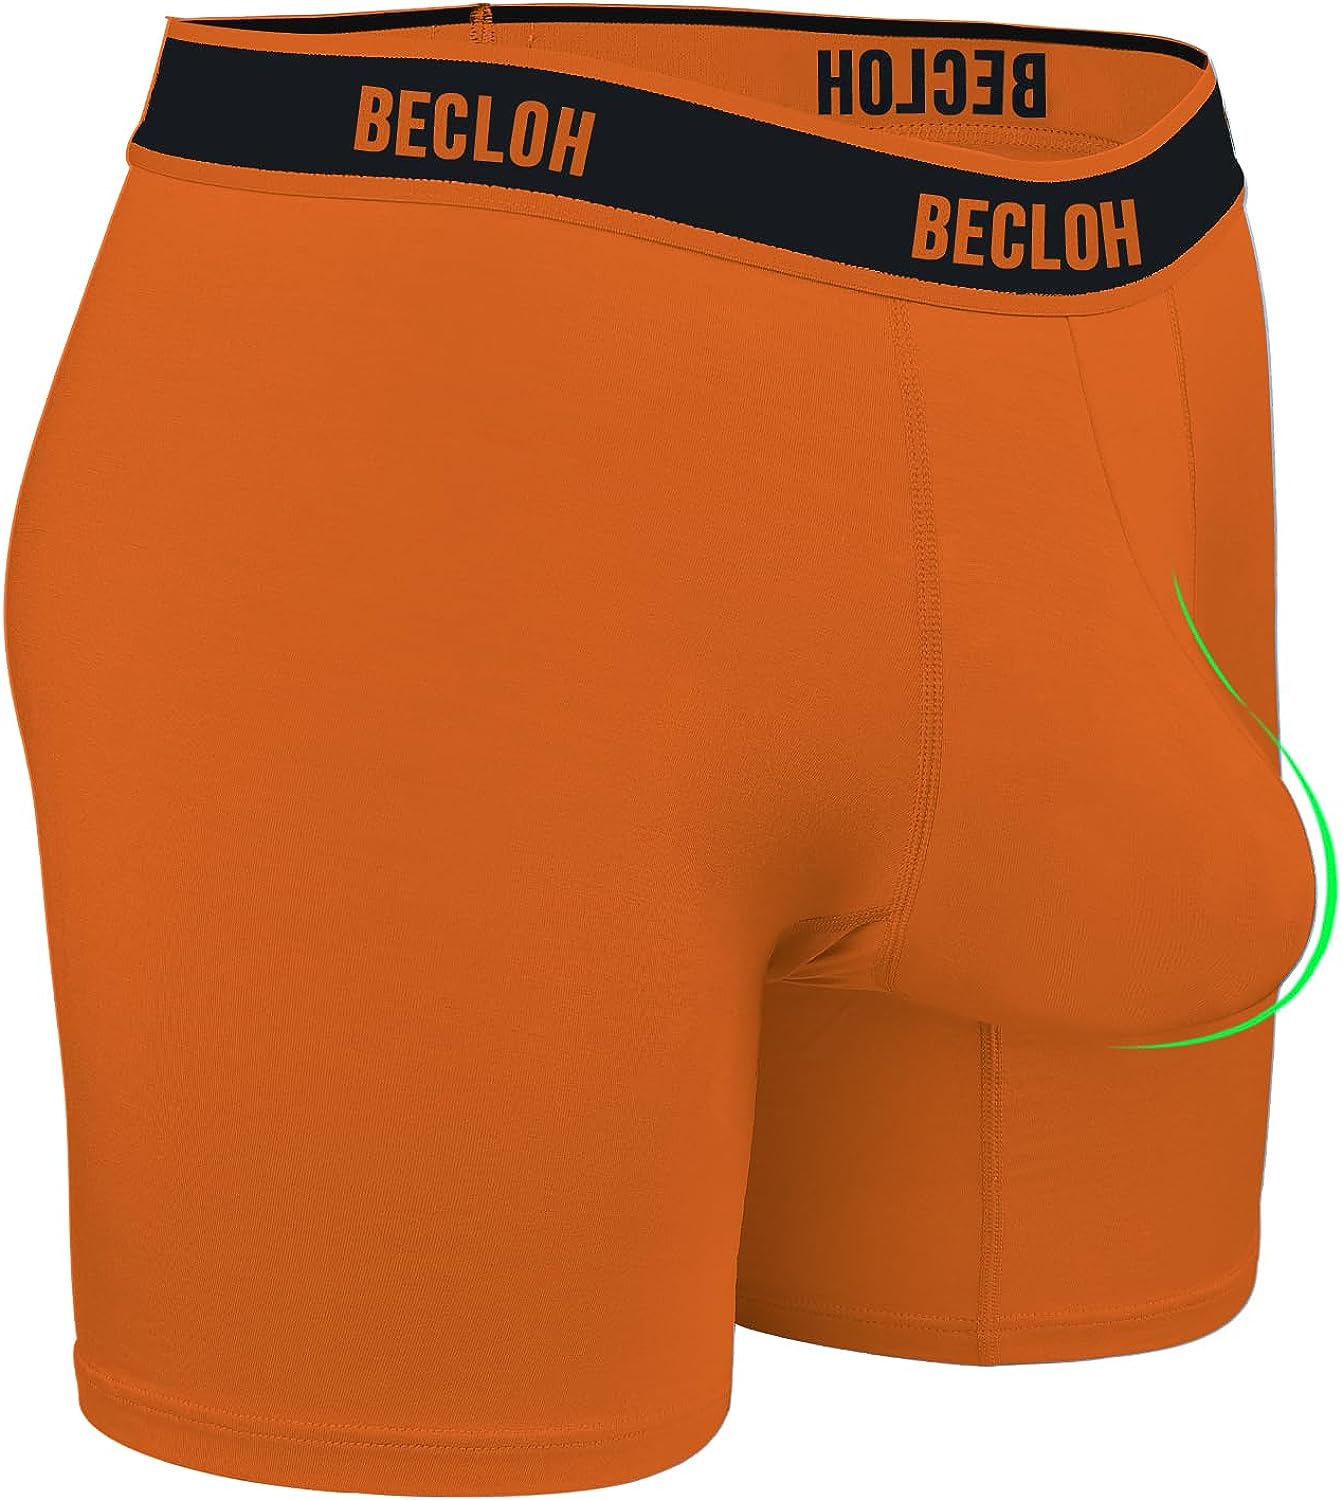 BECLOH Bamboo Boxers -Cool Comfortable Men's Boxer Shorts. Soft